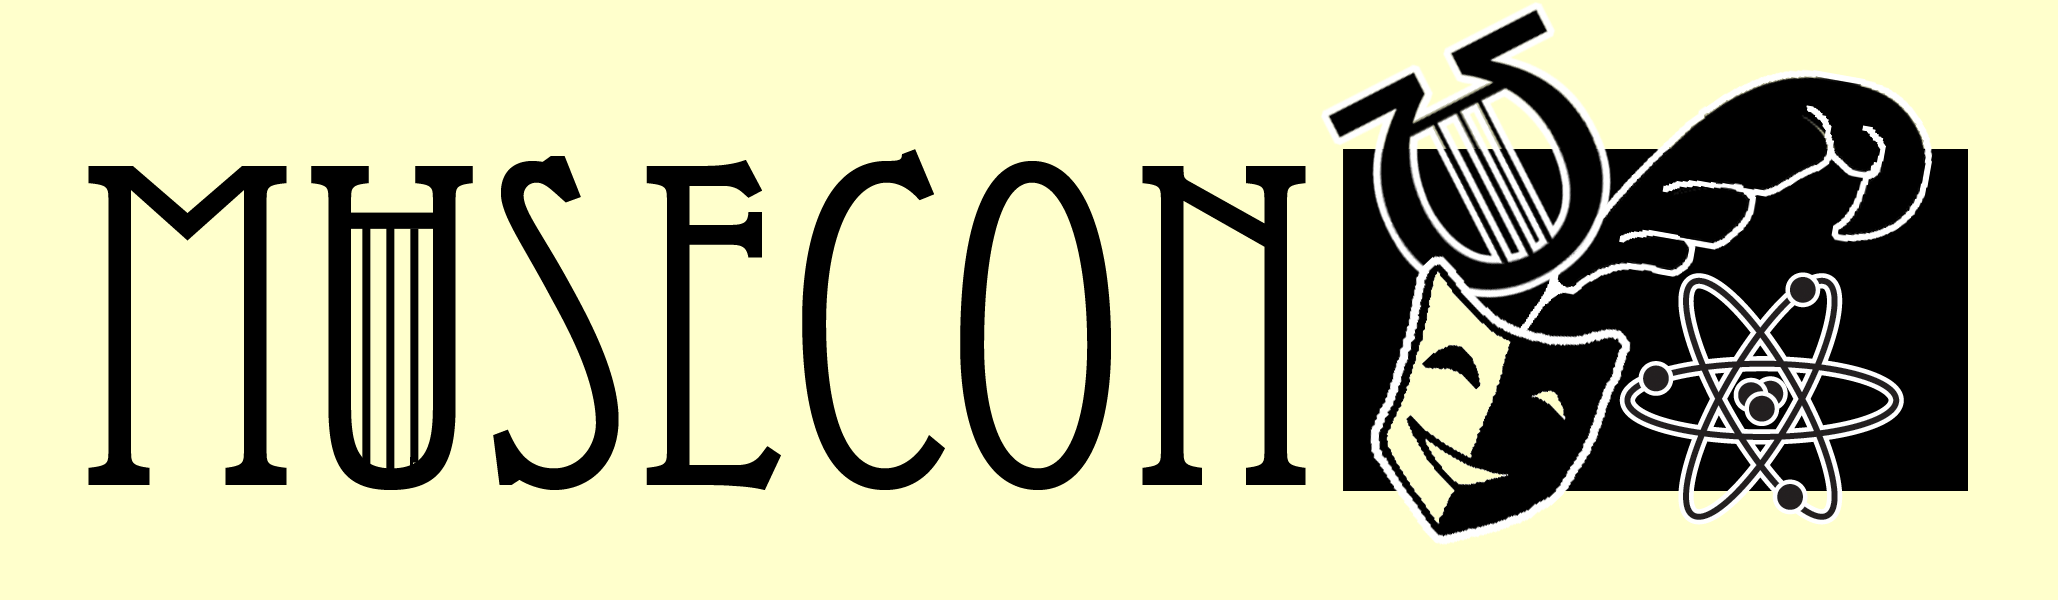 MuseCon 1 Logo